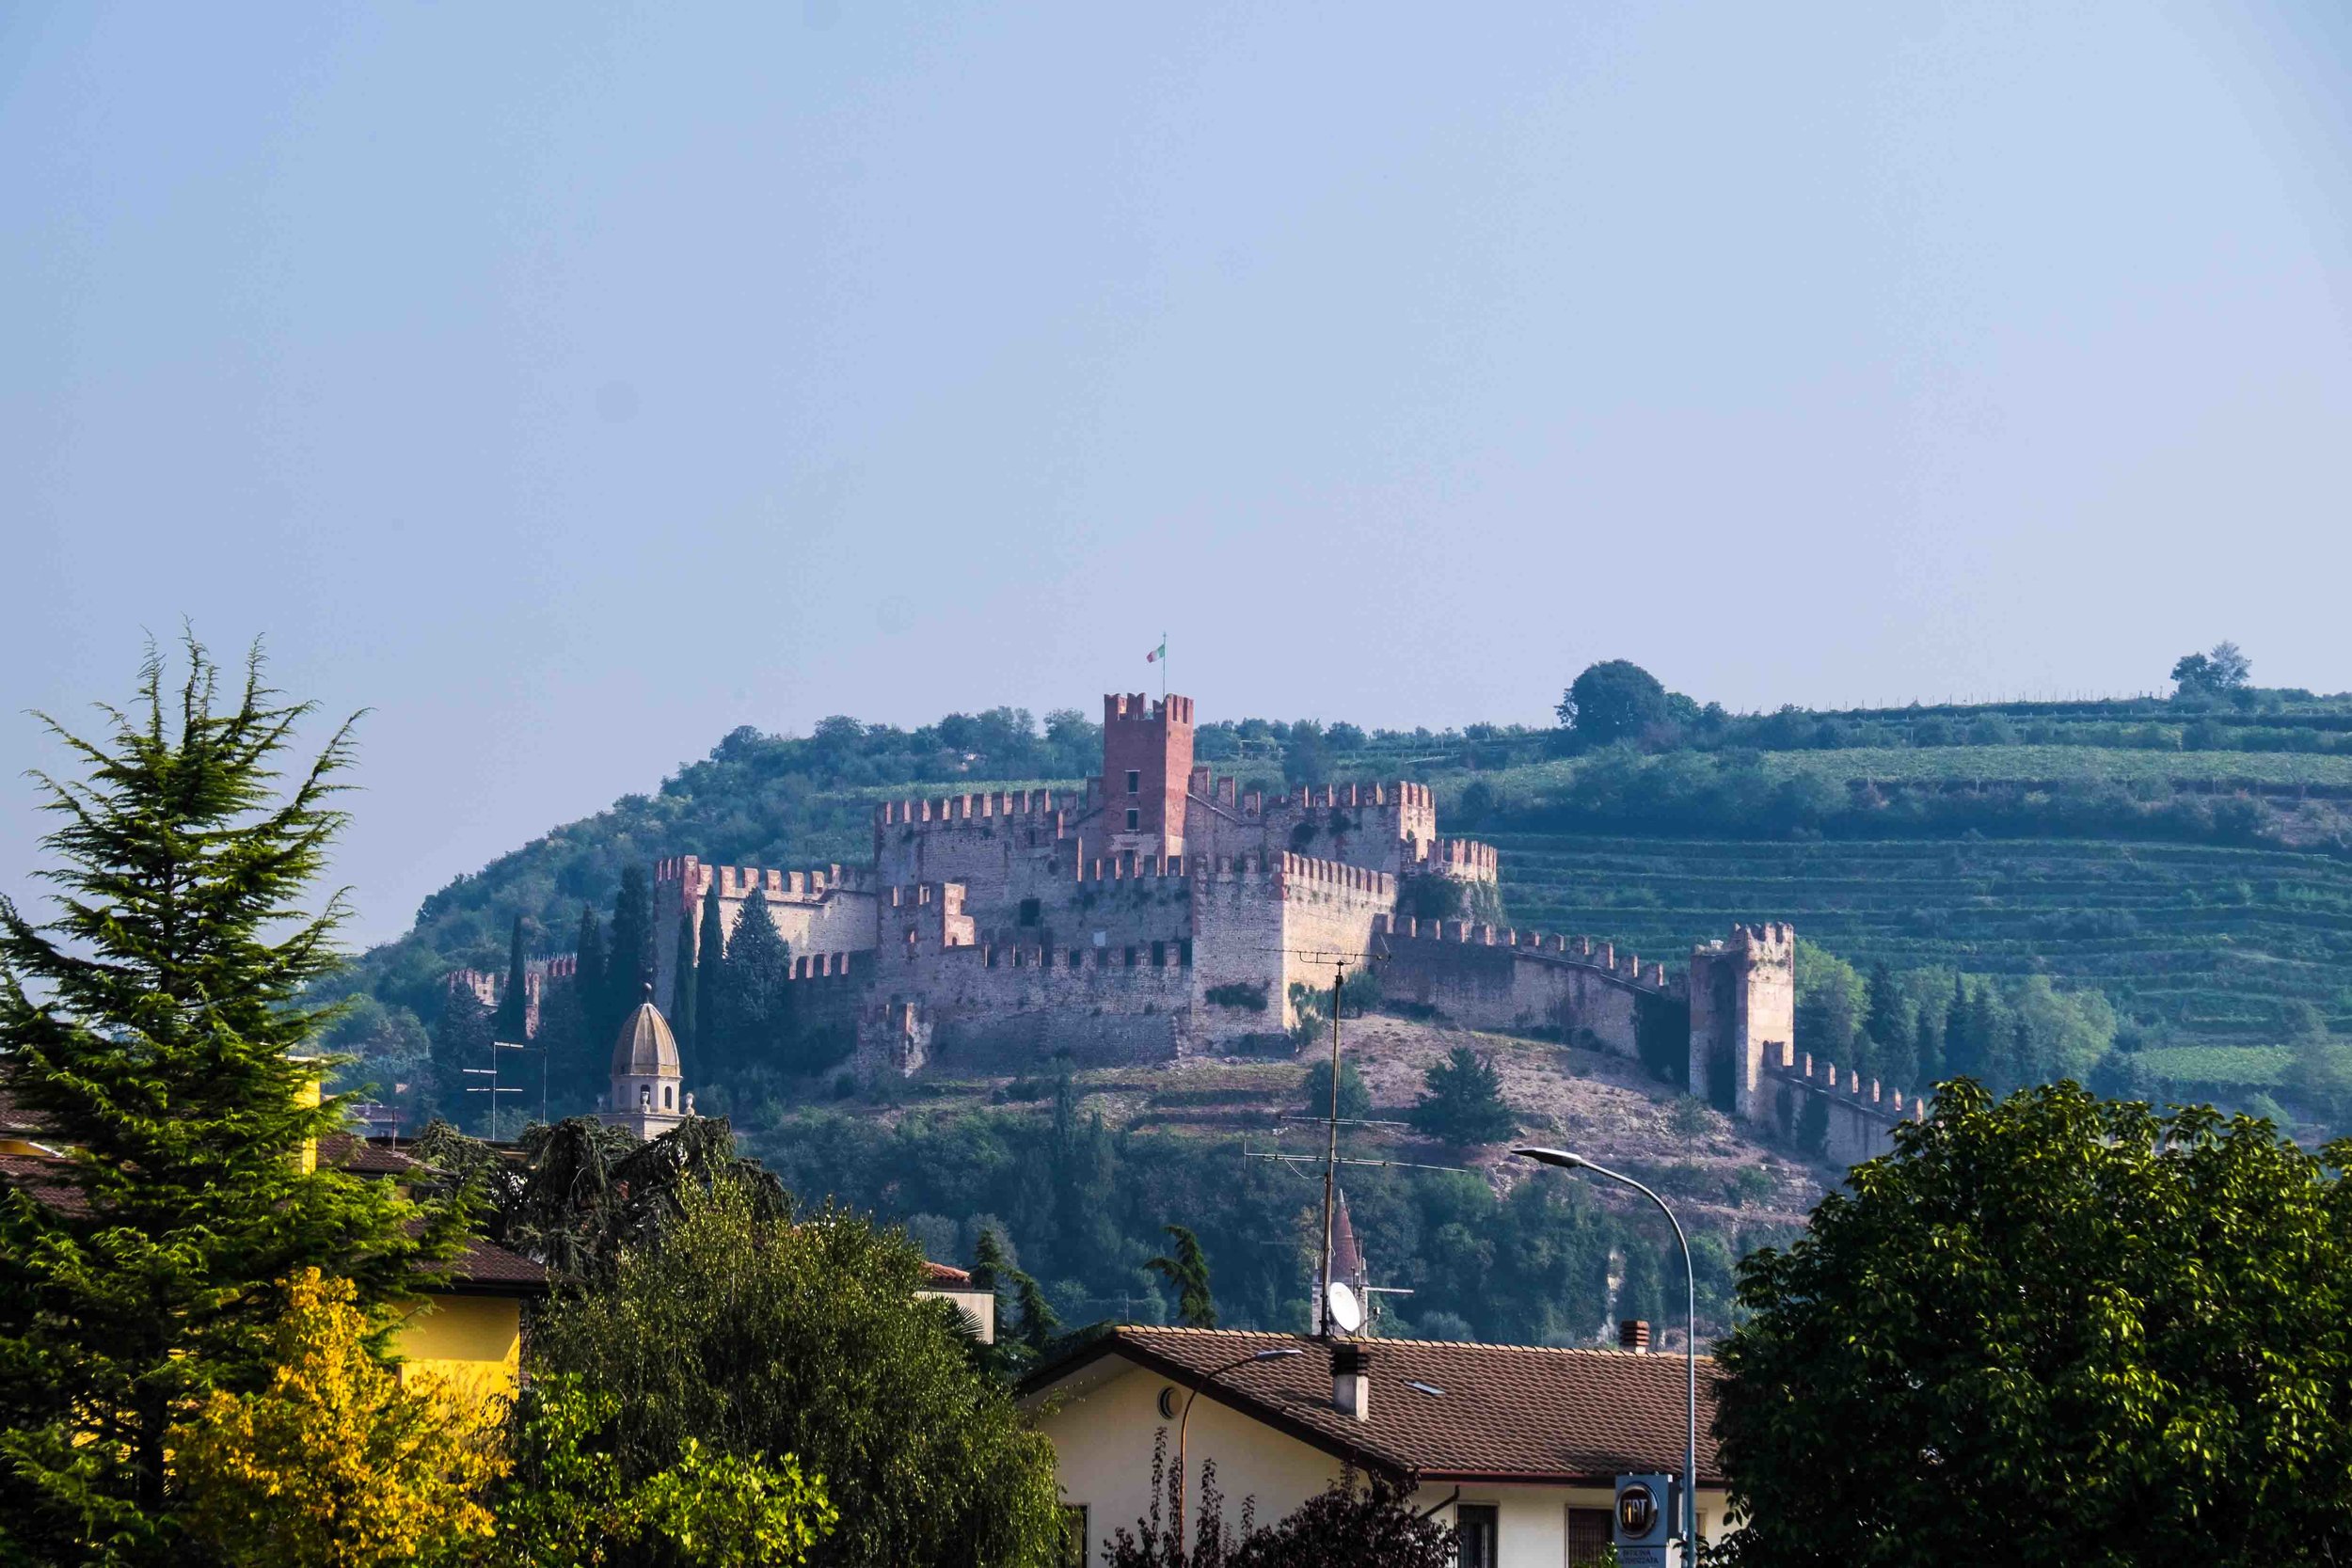  The Castello di Soave and Classico district vineyards, Veneto |  ©John Szabo (published by Jacqui Small)  